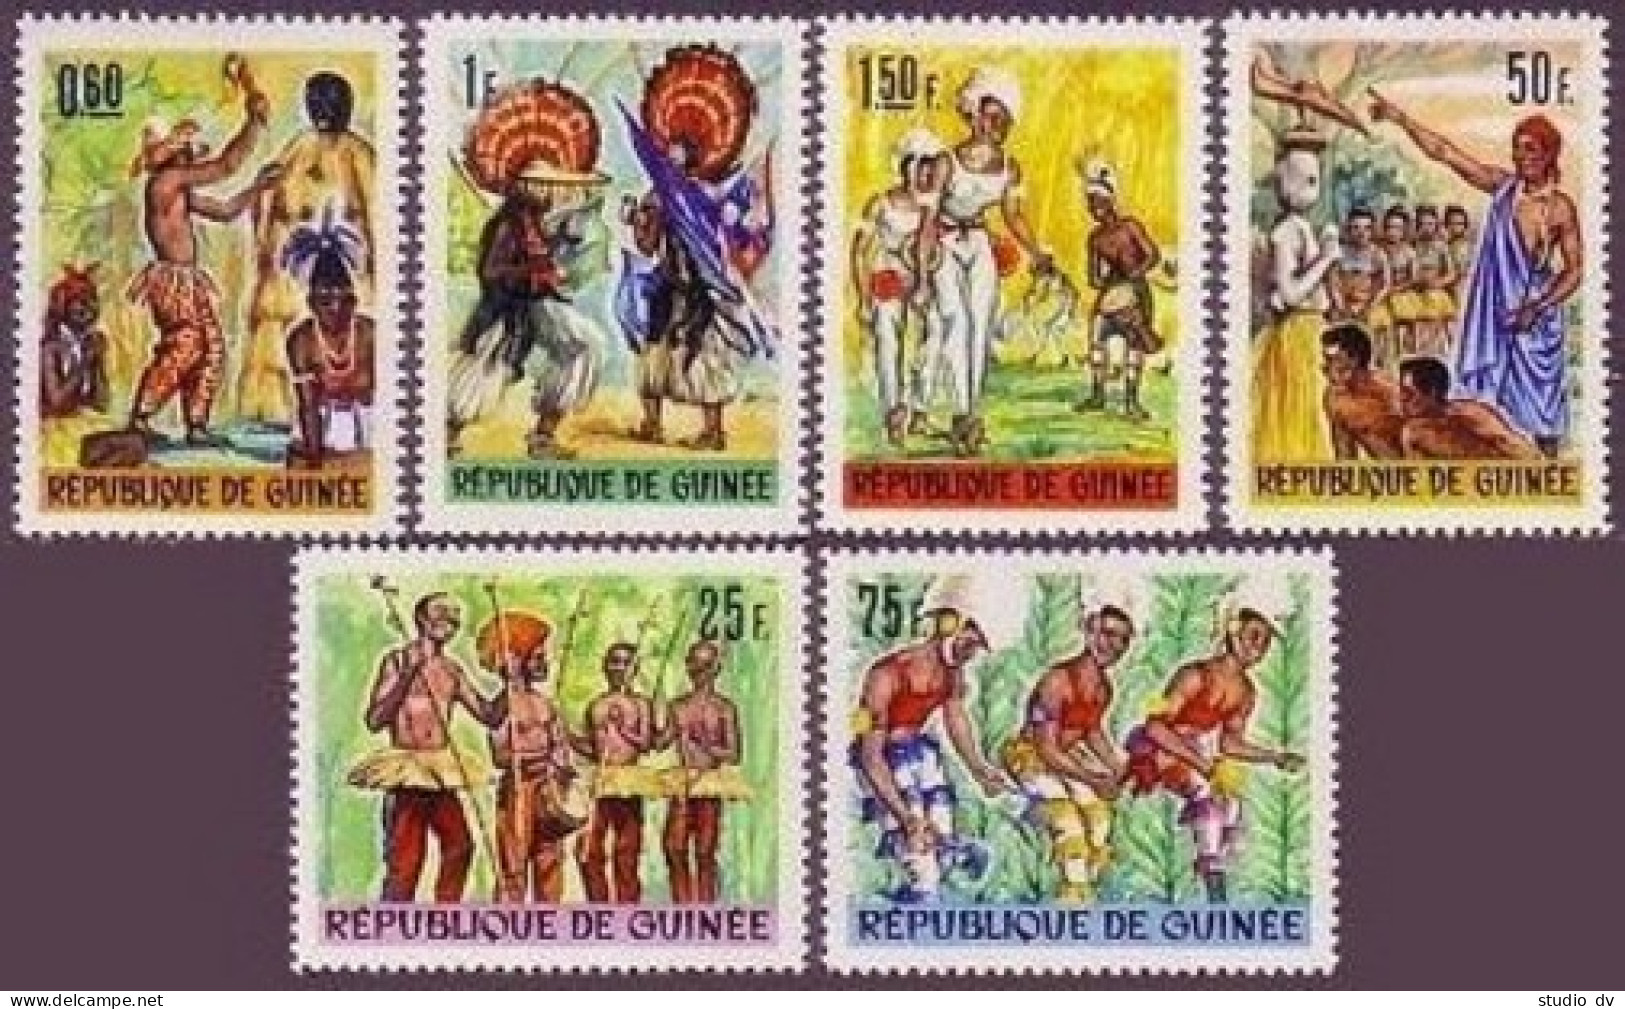 Guinea 436-441,hinged. Mi 396-401, Festival Art & Culture,1966.National Dancers. - Guinea (1958-...)